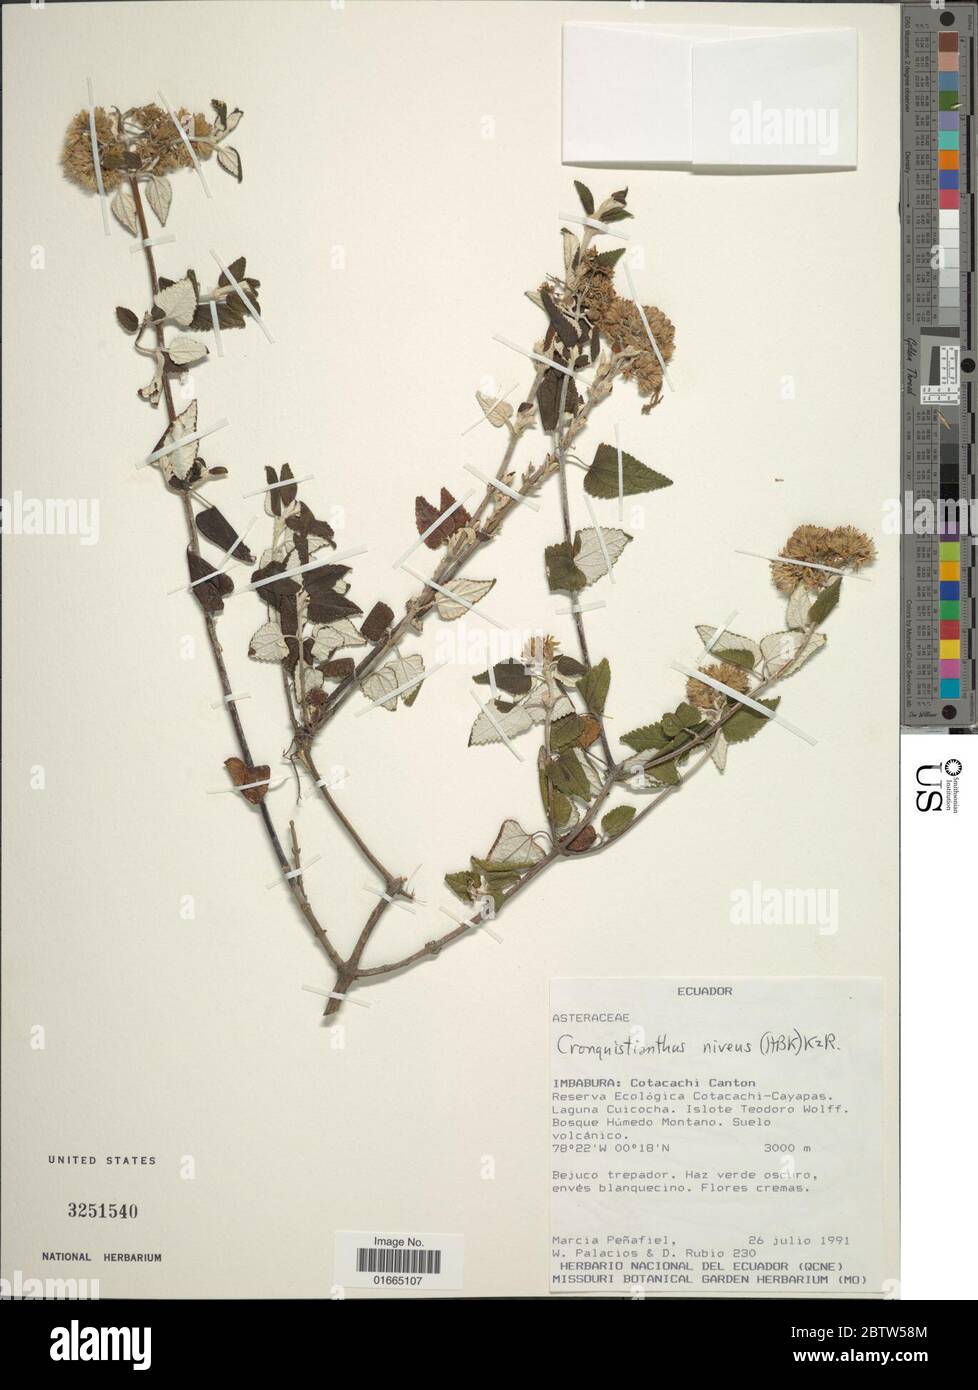 Cronquistianthus niveus HBK RM King H Rob. Stock Photo